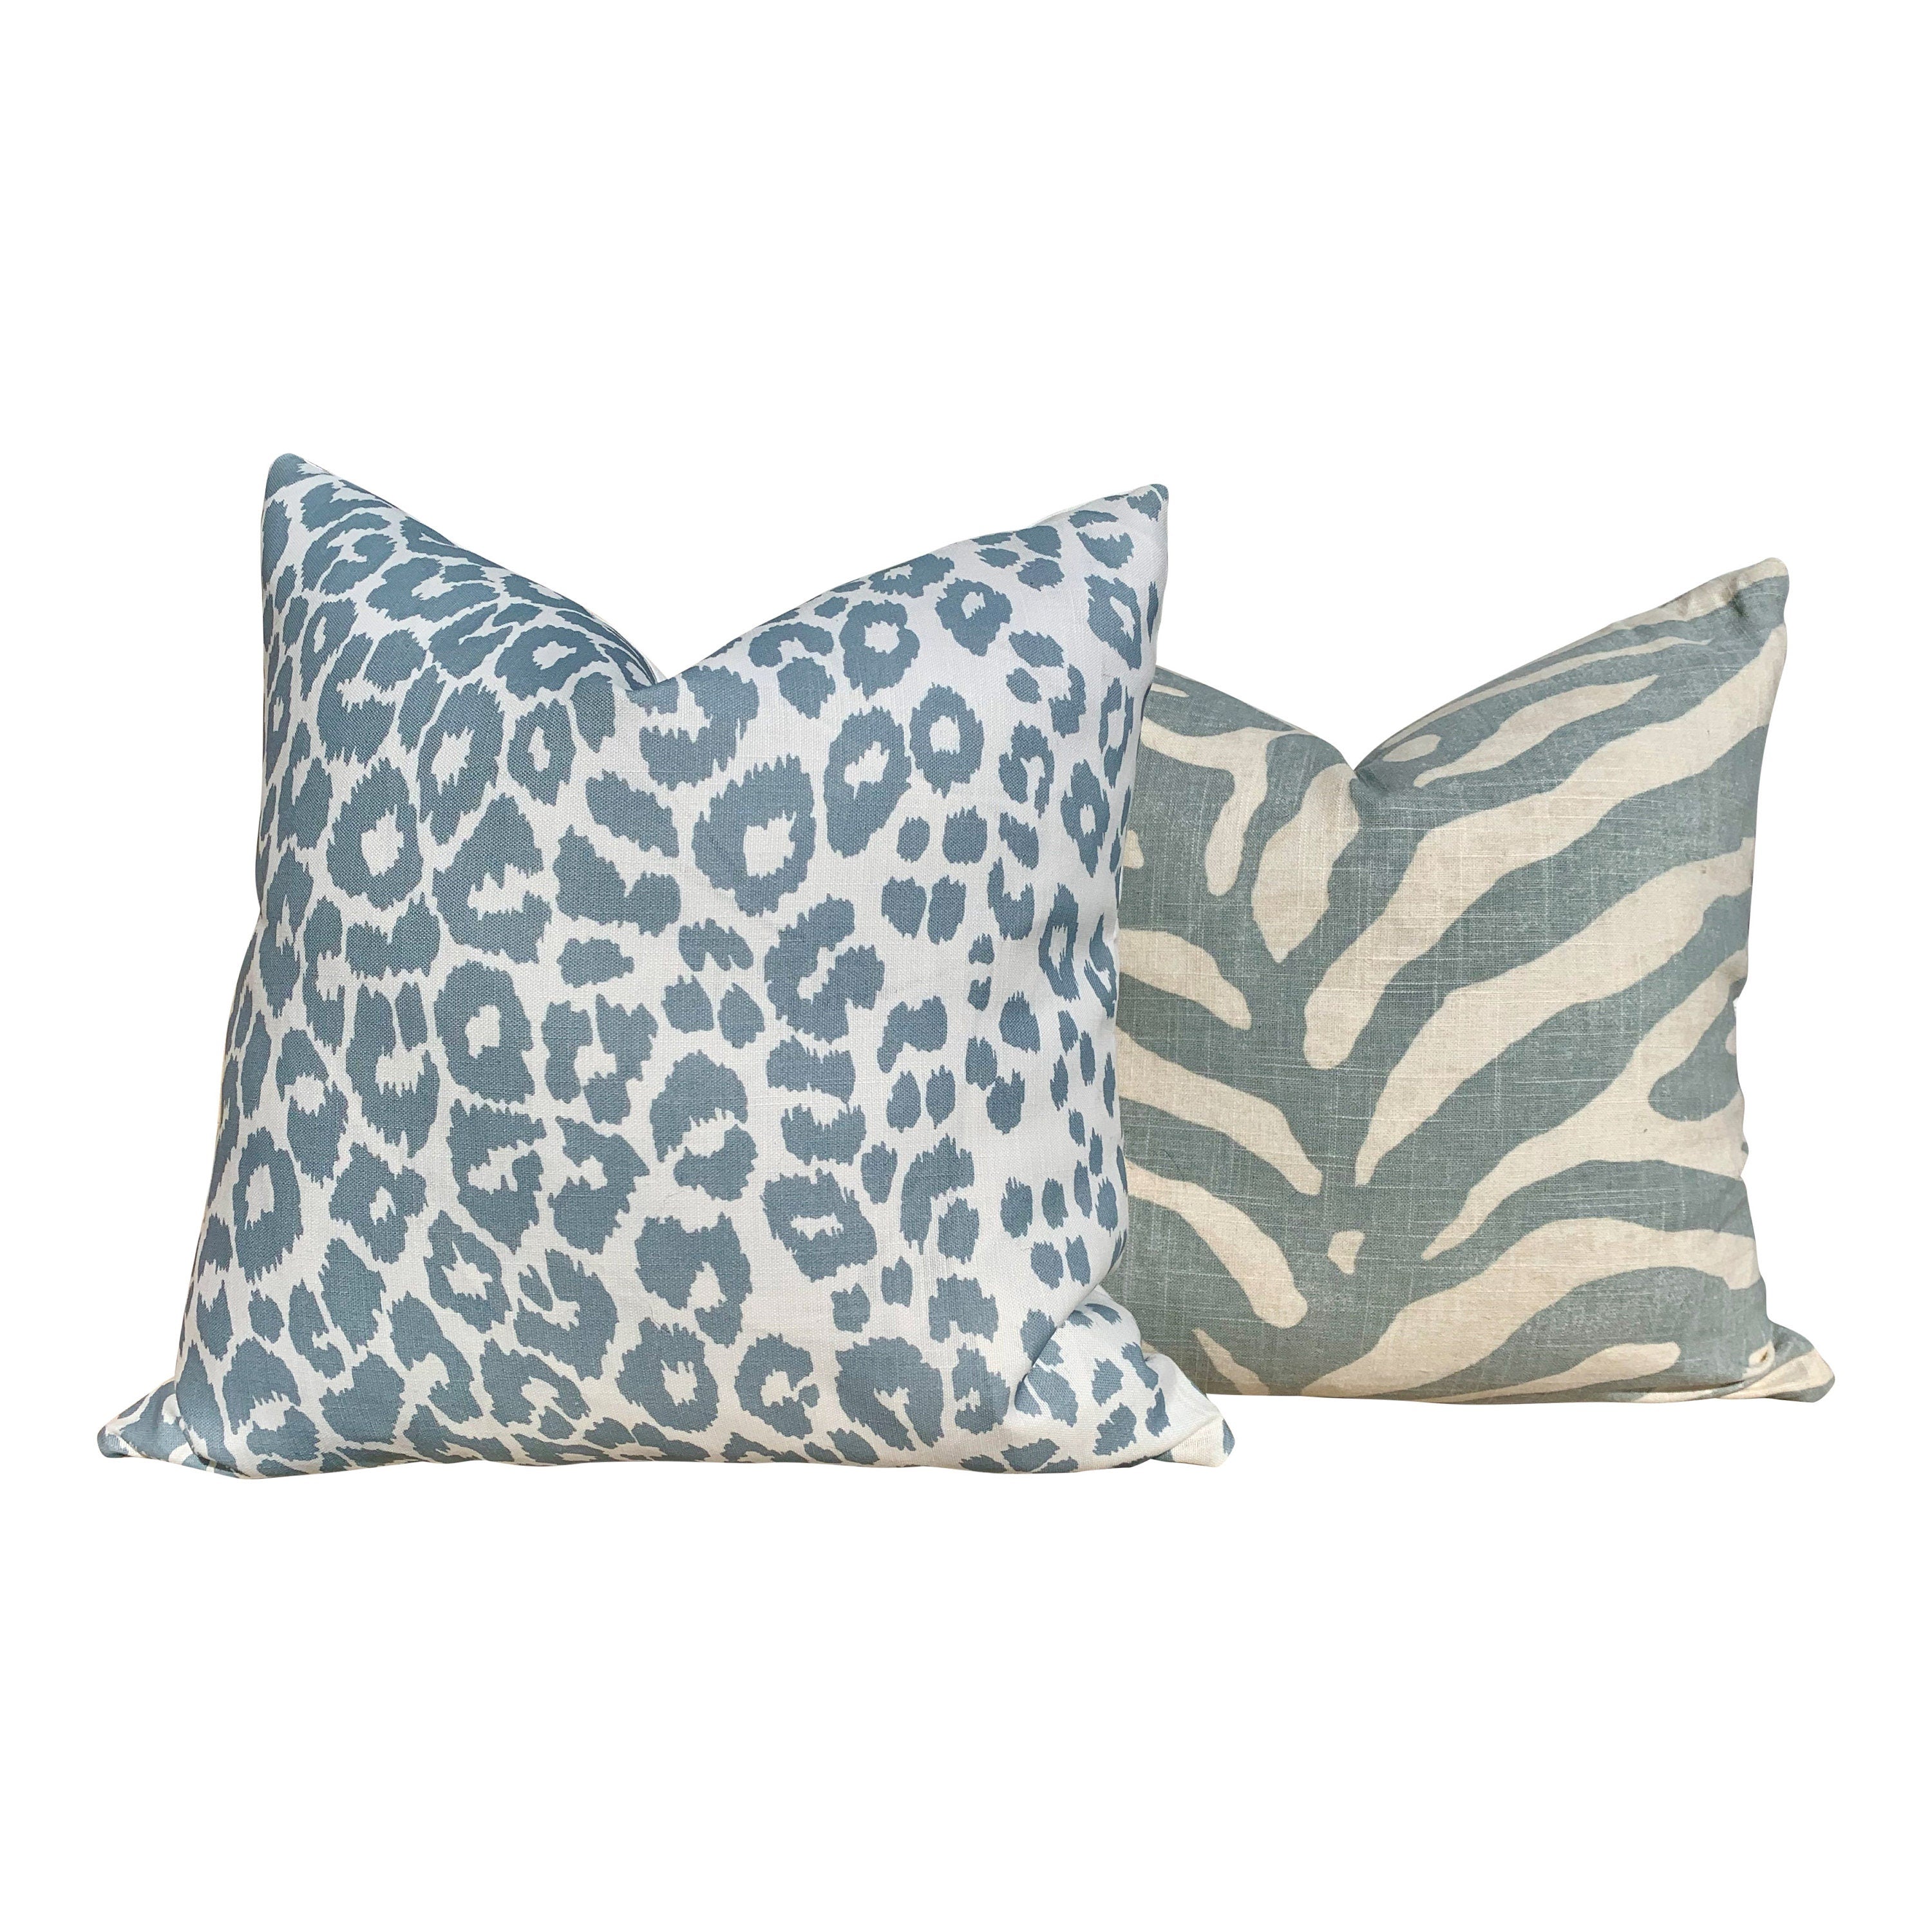 Indoor/Outdoor Schumacher Iconic Leopard Pillow Sky Blue. Outdoor Dust Blue  Pillow. Decorative pillow, designer cover, performance pillow